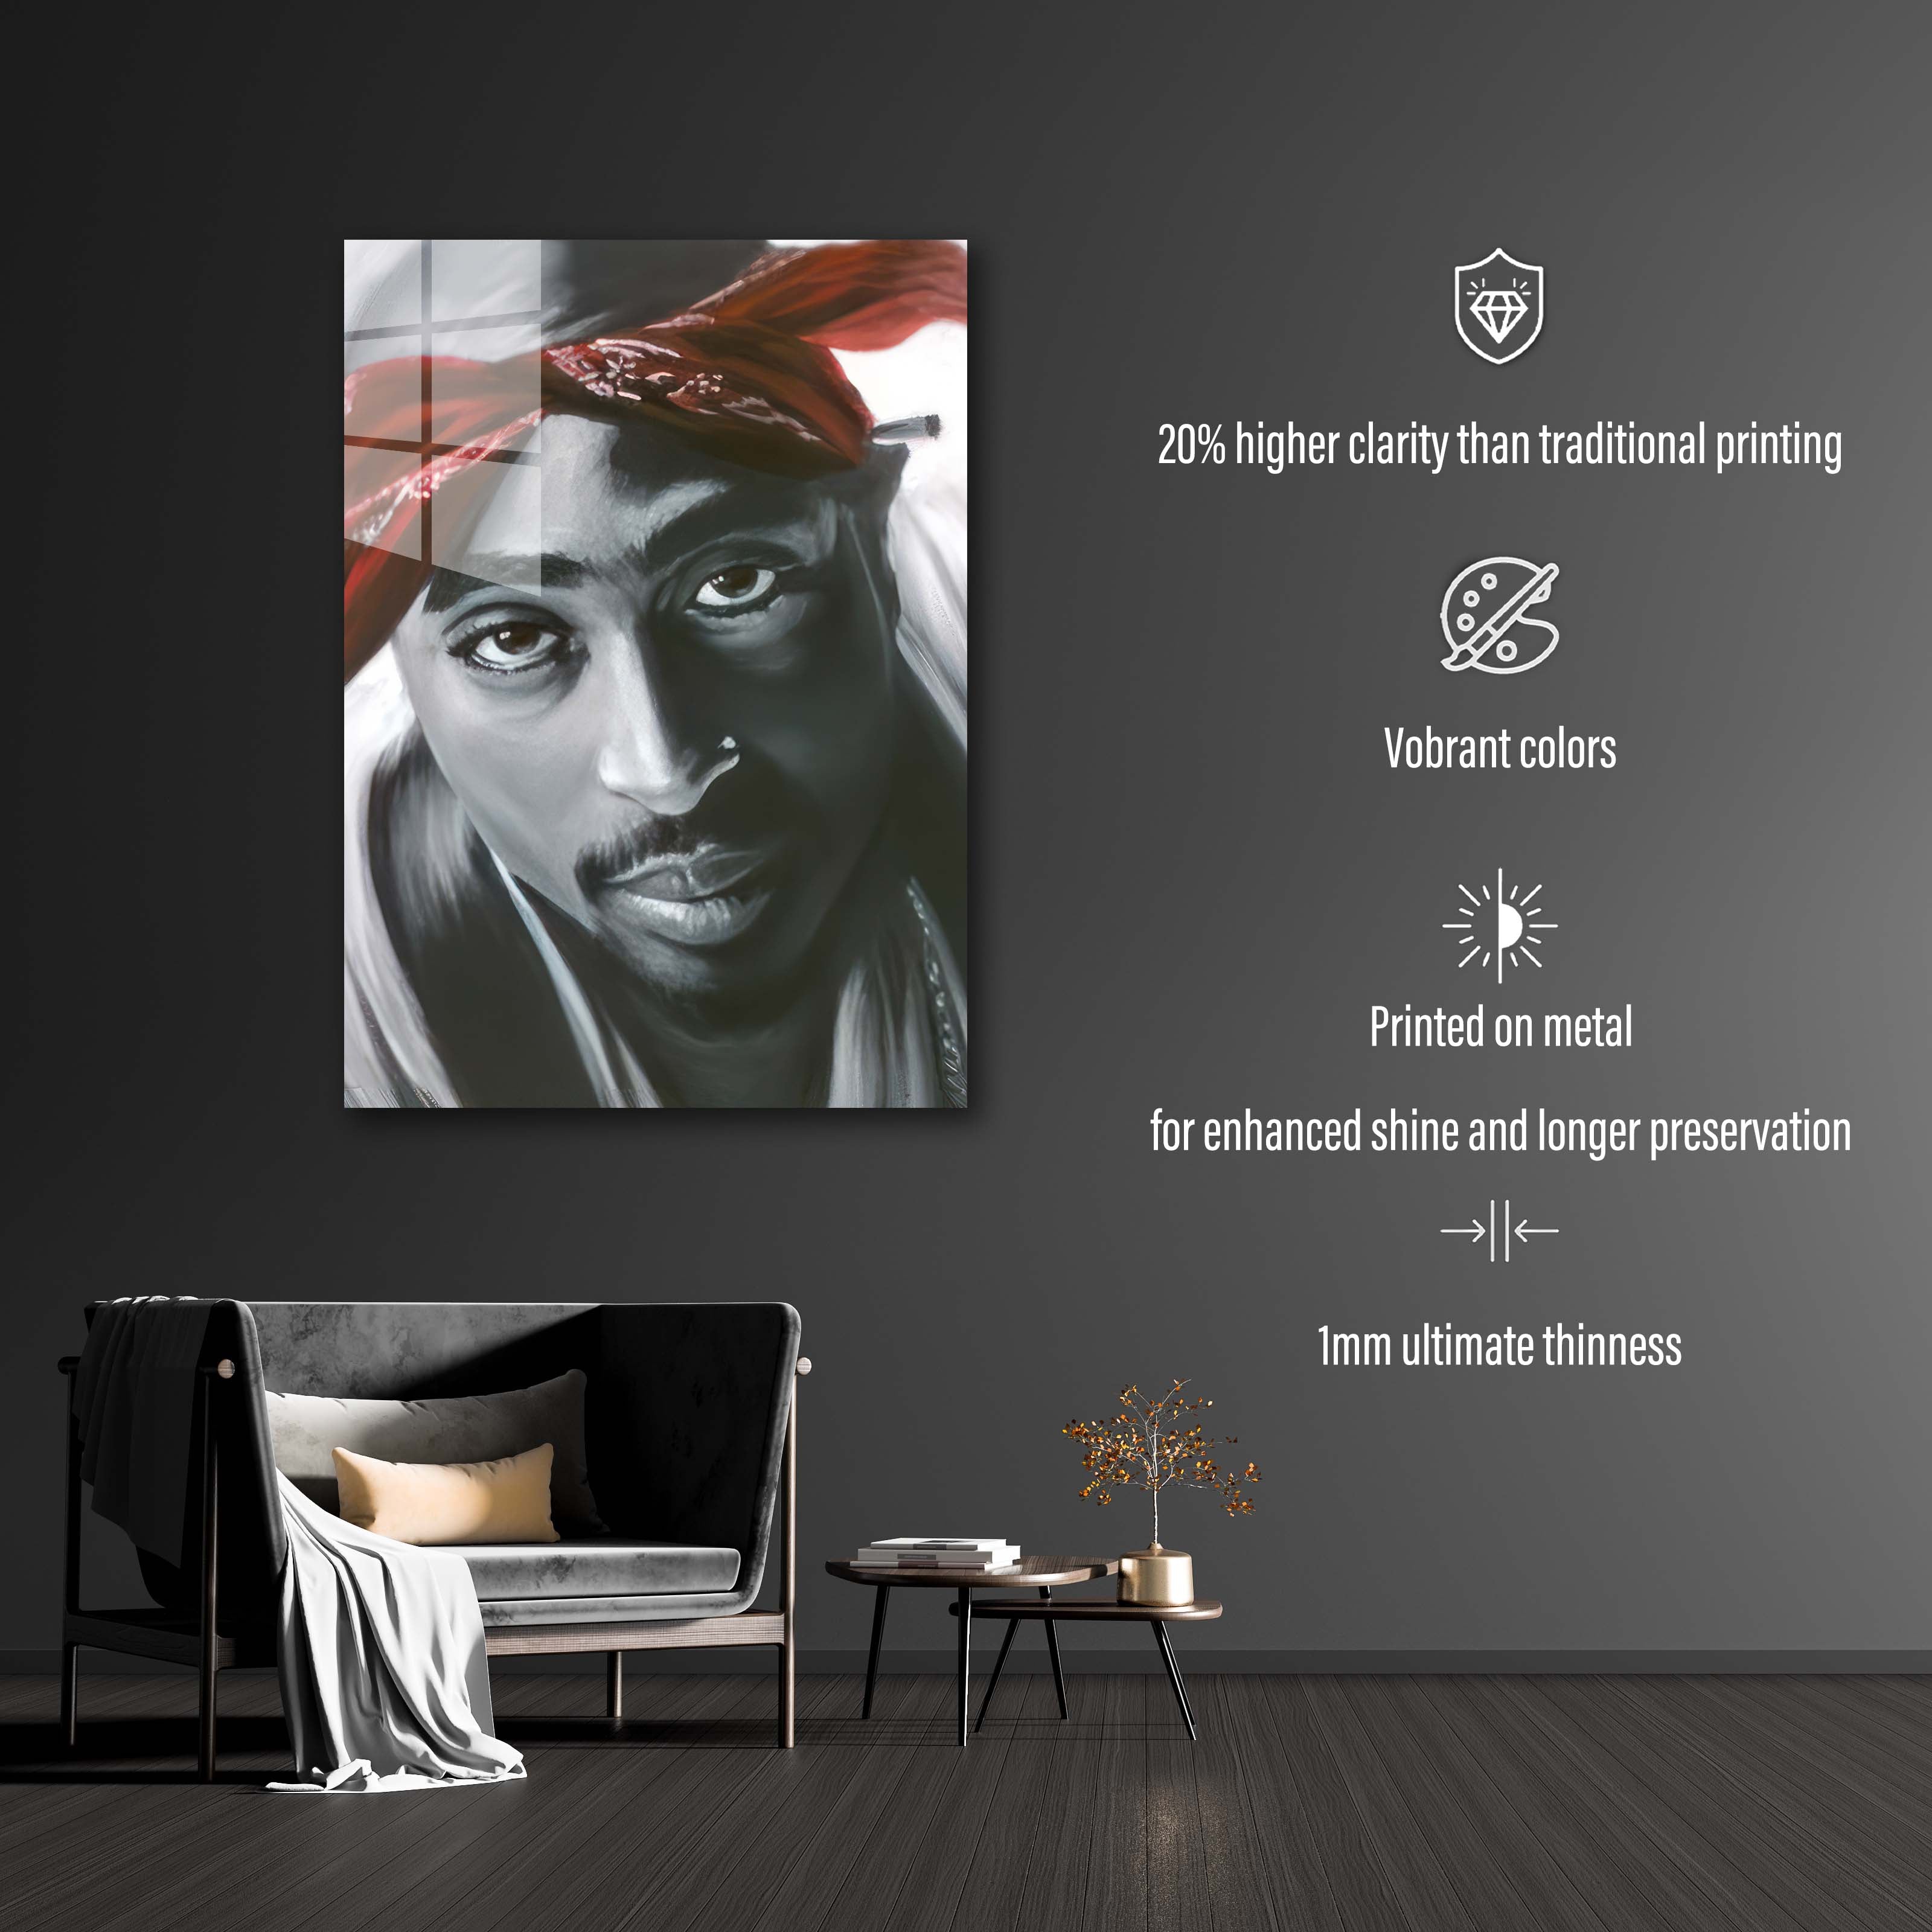 Legend 2pac Shakur-designed by @Vinahayum